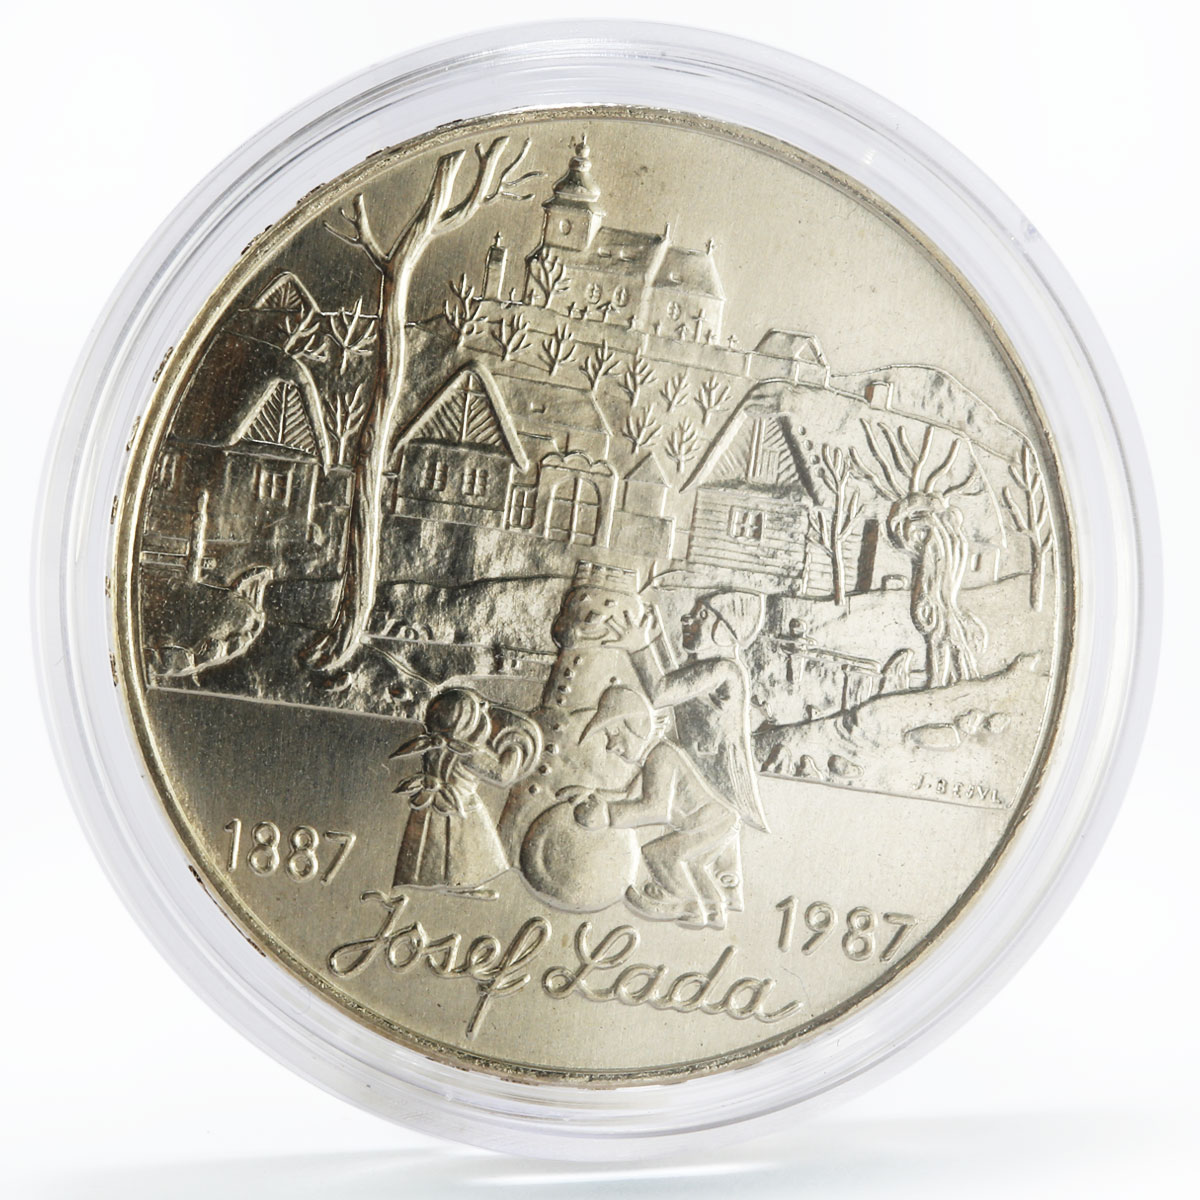 Czechoslovakia 500 korun Centennial of Painter Josef Lada silver coin 1987